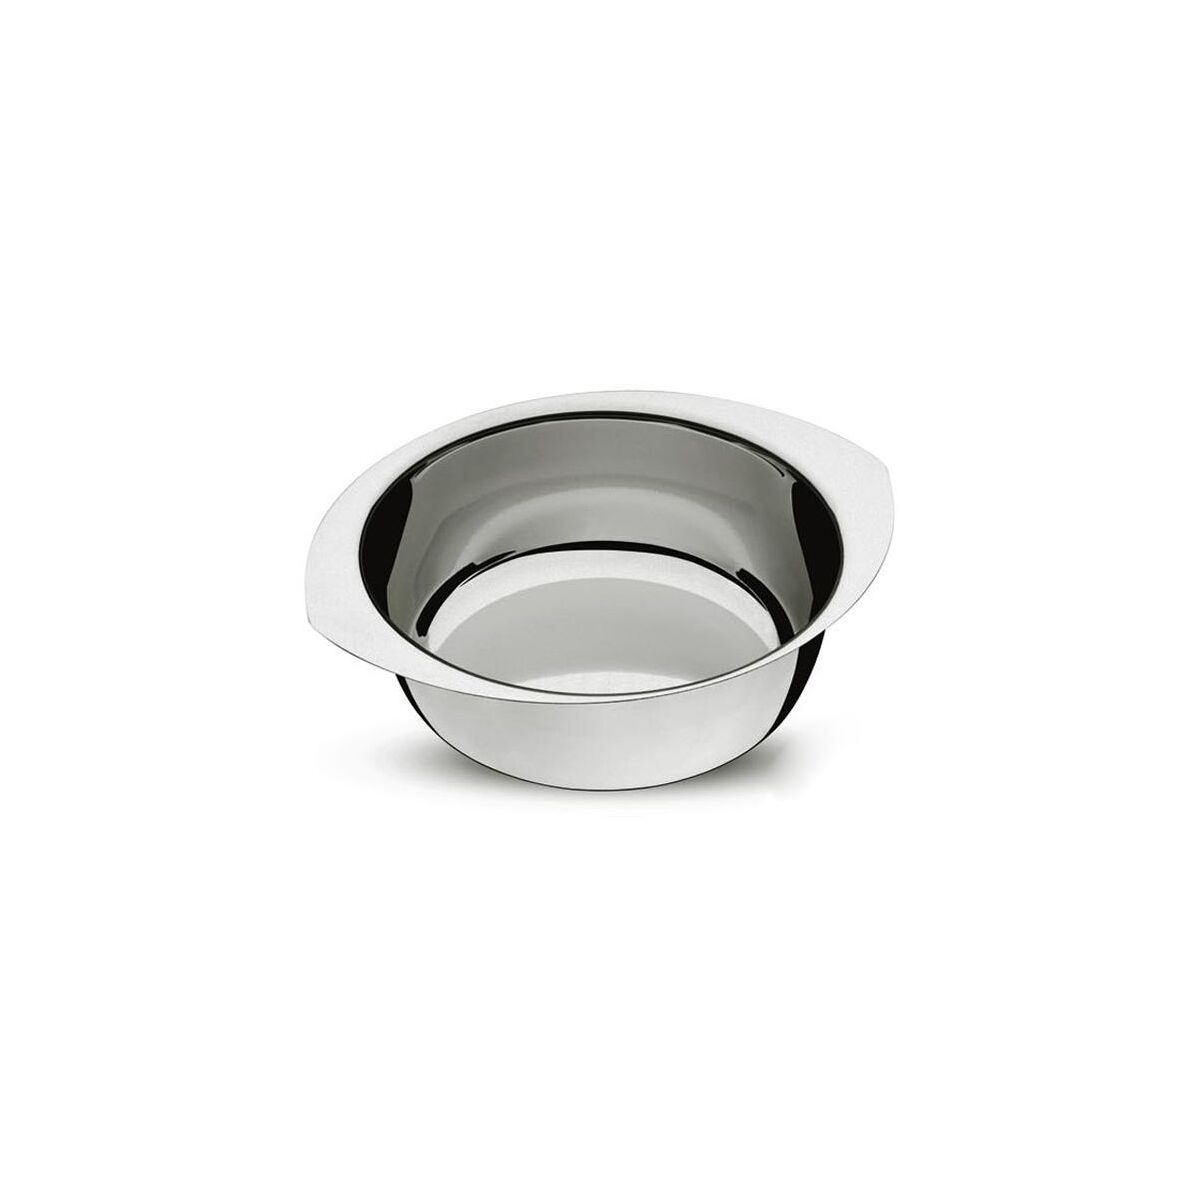 Tramontina Service stainless steel dessert bowl, 0.16 L